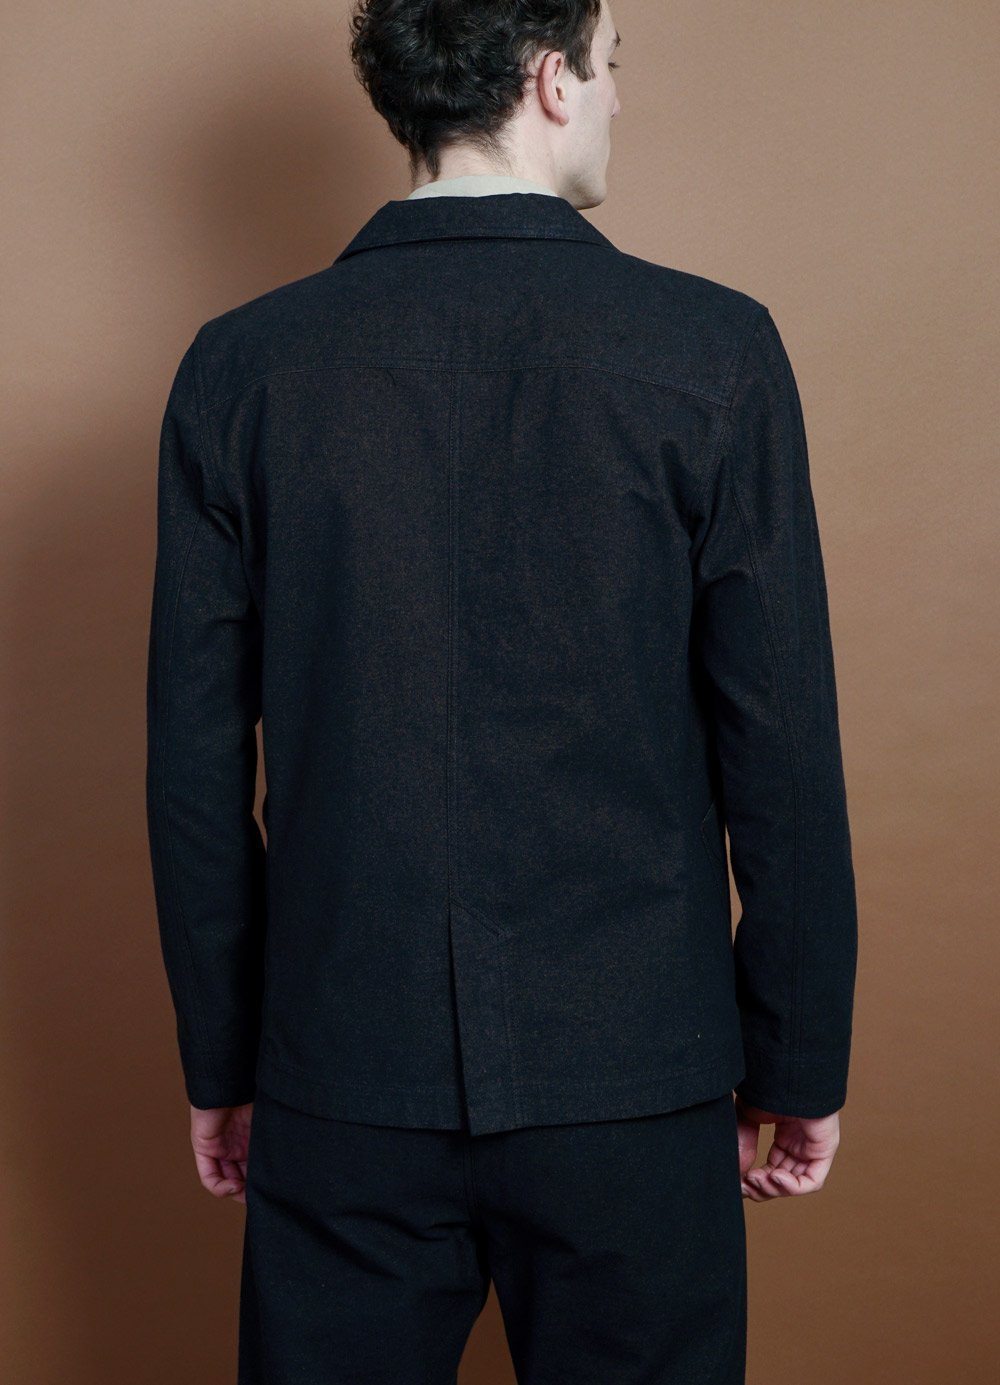 HANSEN Garments - LAURITZ | Refined Work Jacket | Nero - HANSEN Garments